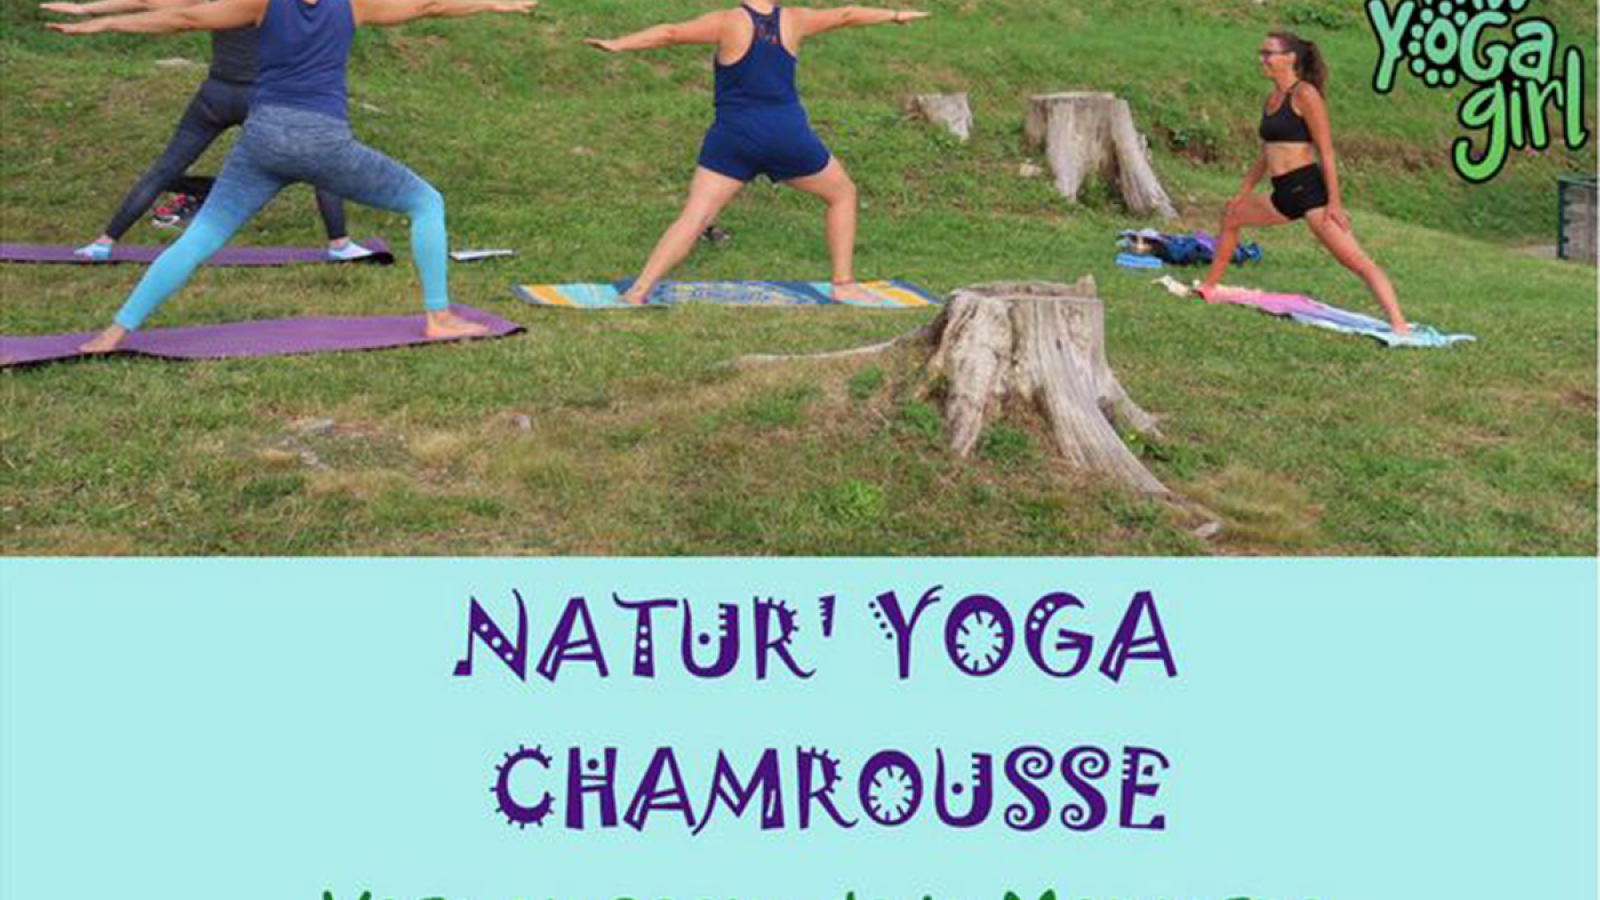 Natur'yoga poster